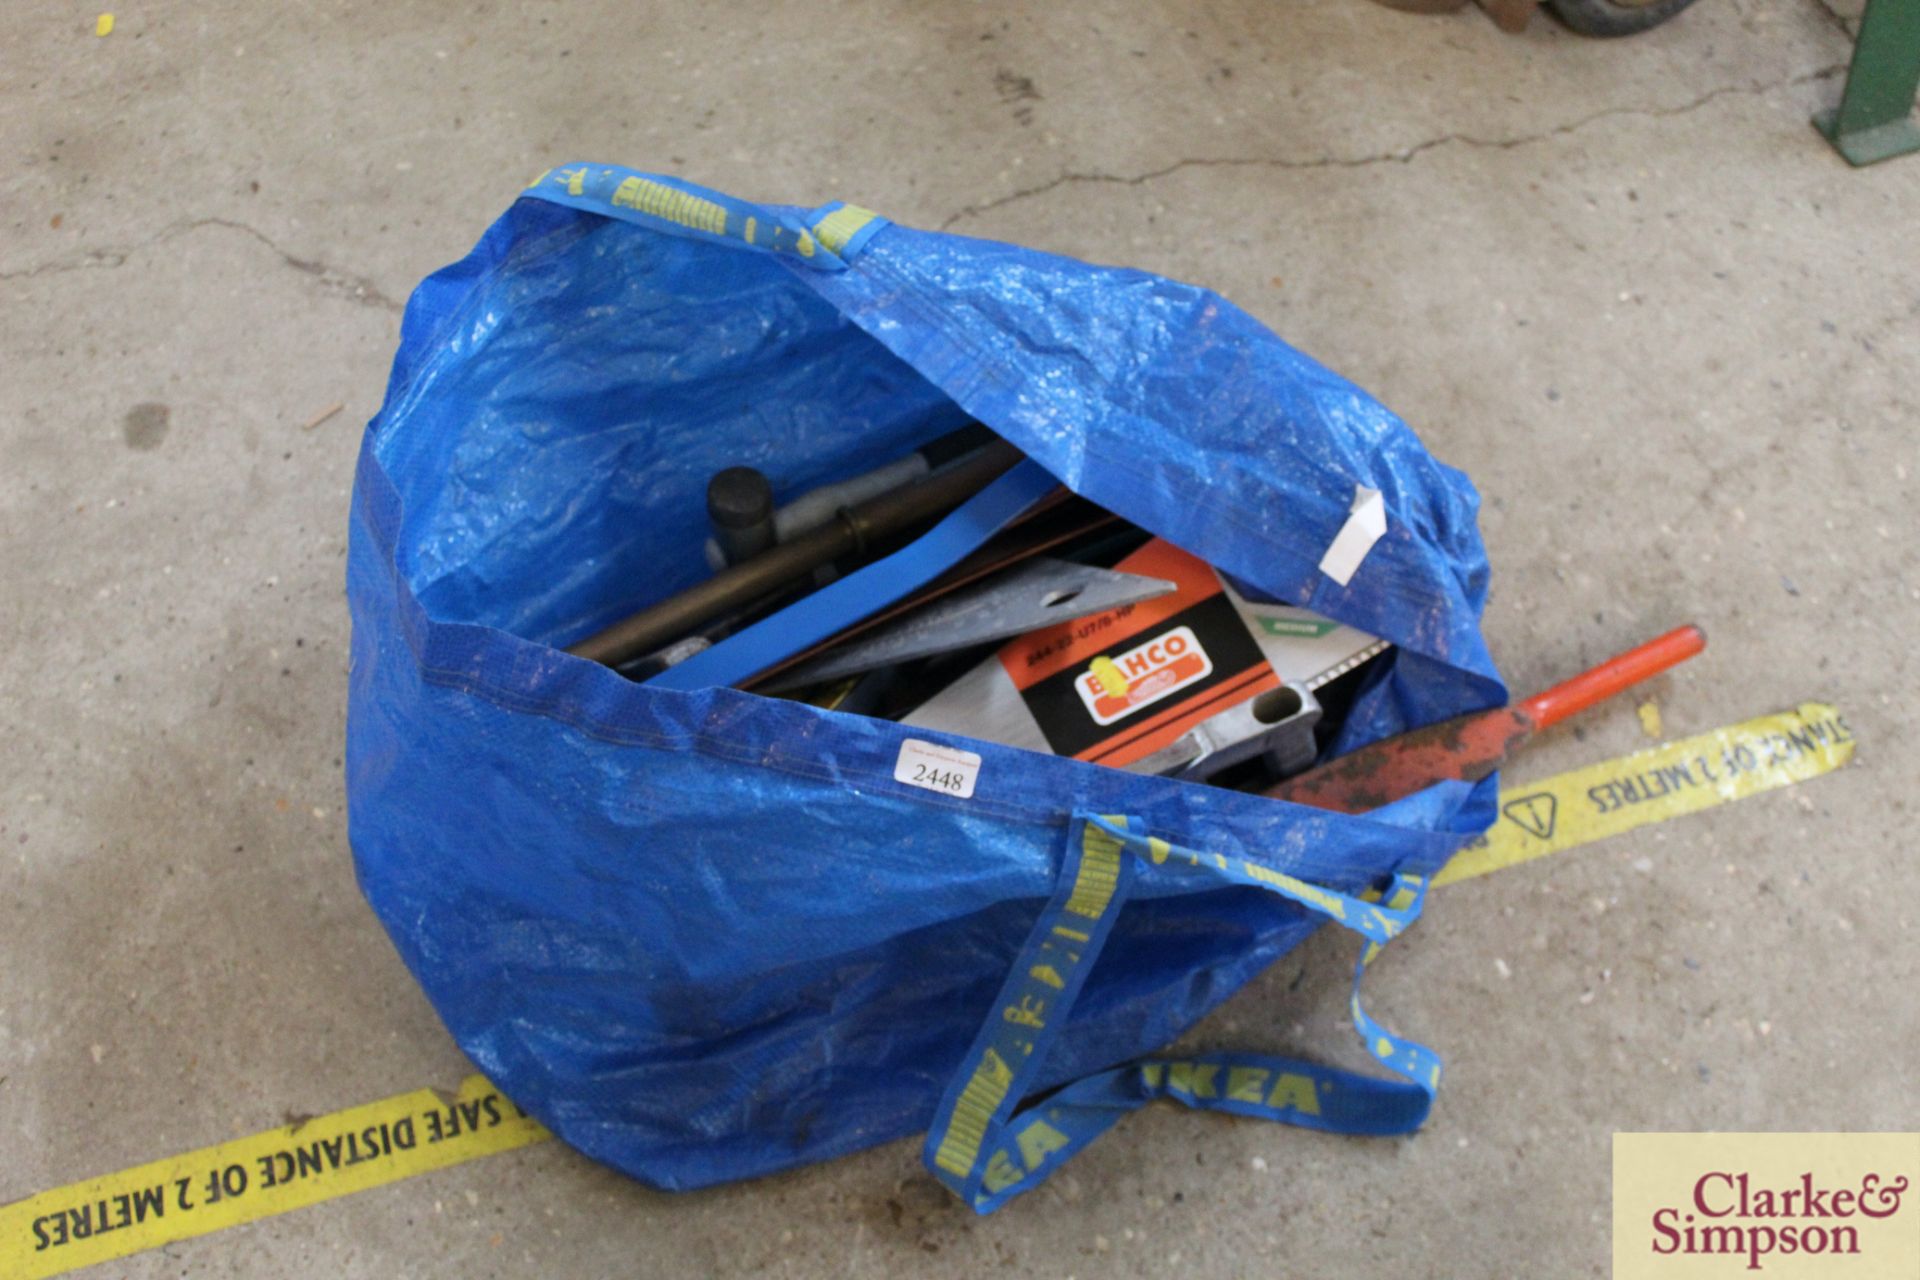 Tool bag containing various saws, squares etc.